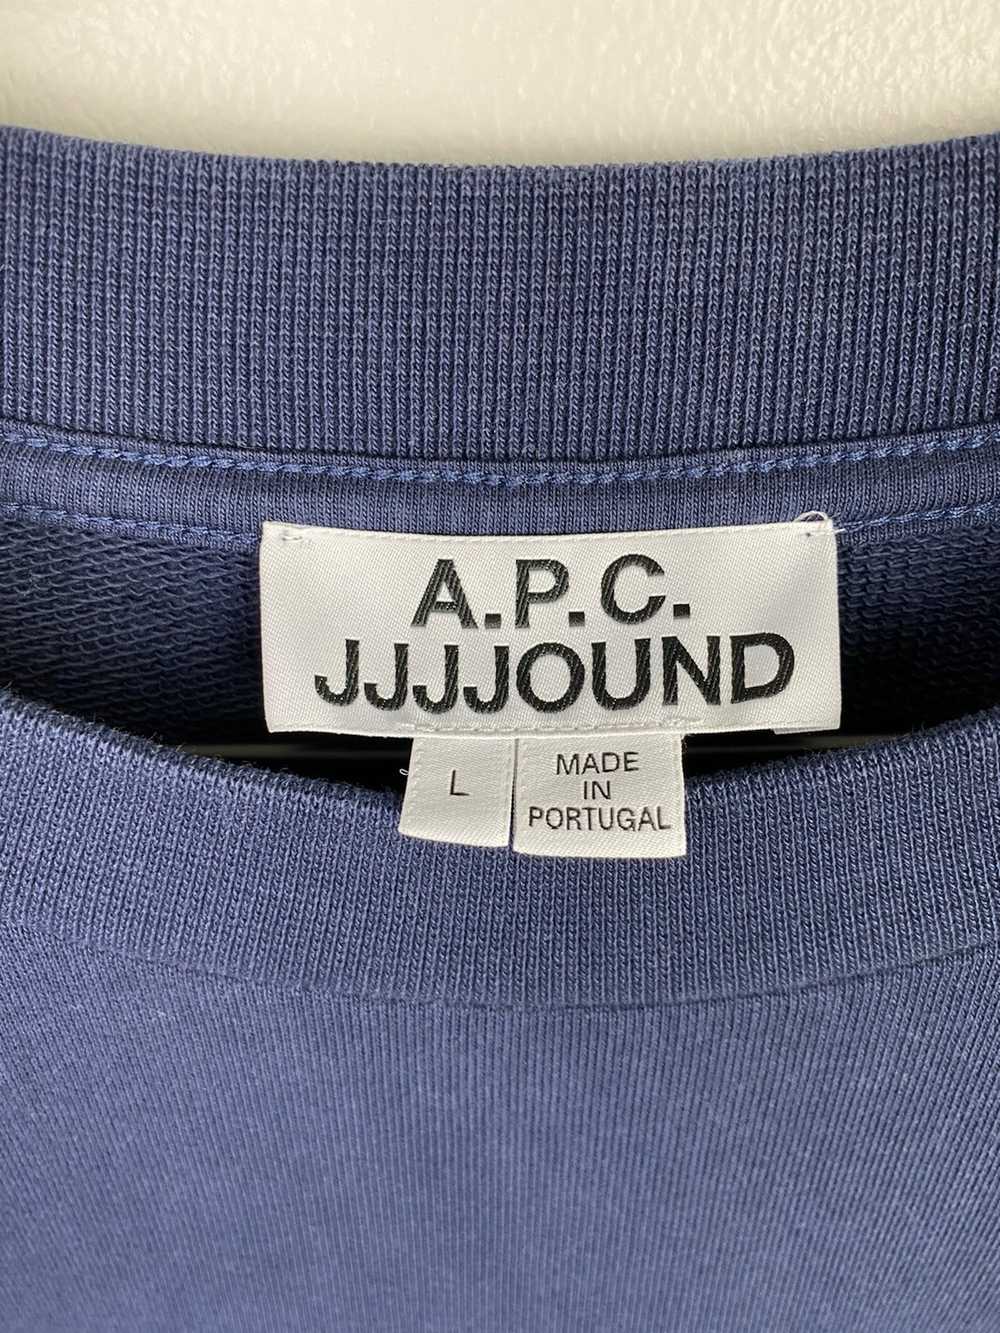 A.P.C. × Jjjjound Justin Crewneck - image 4